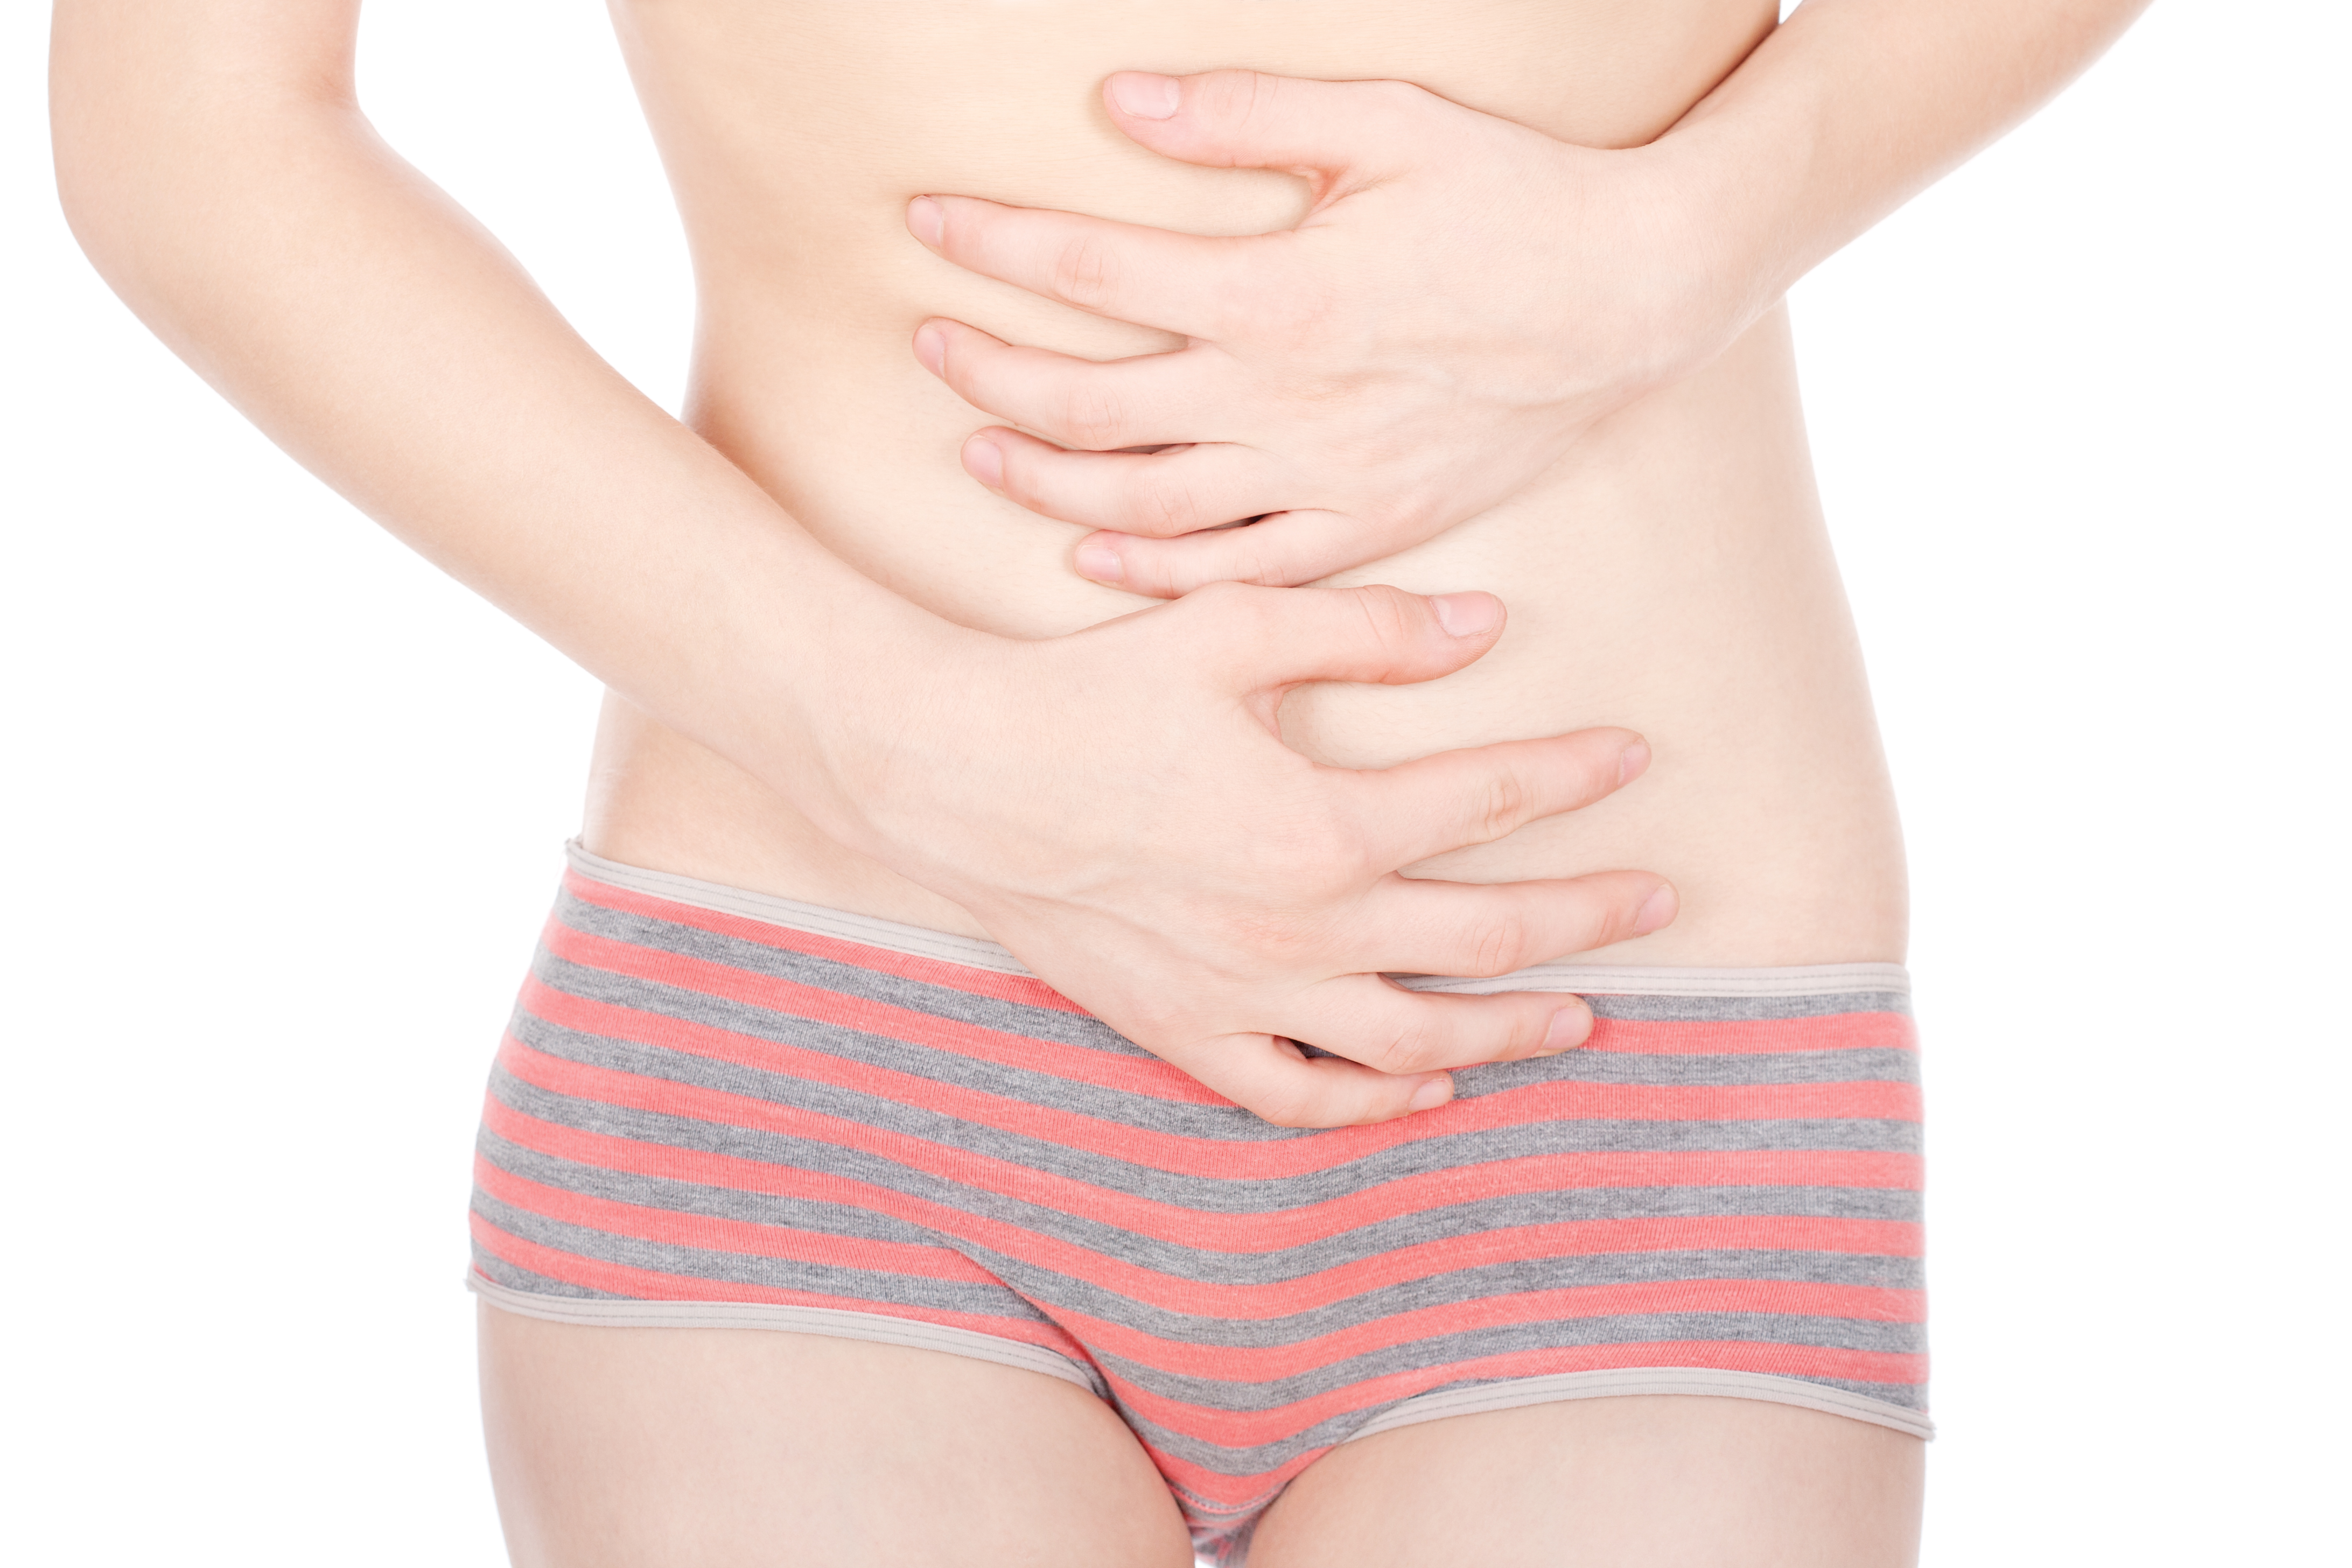 women with abdominal pain due to endometriosis